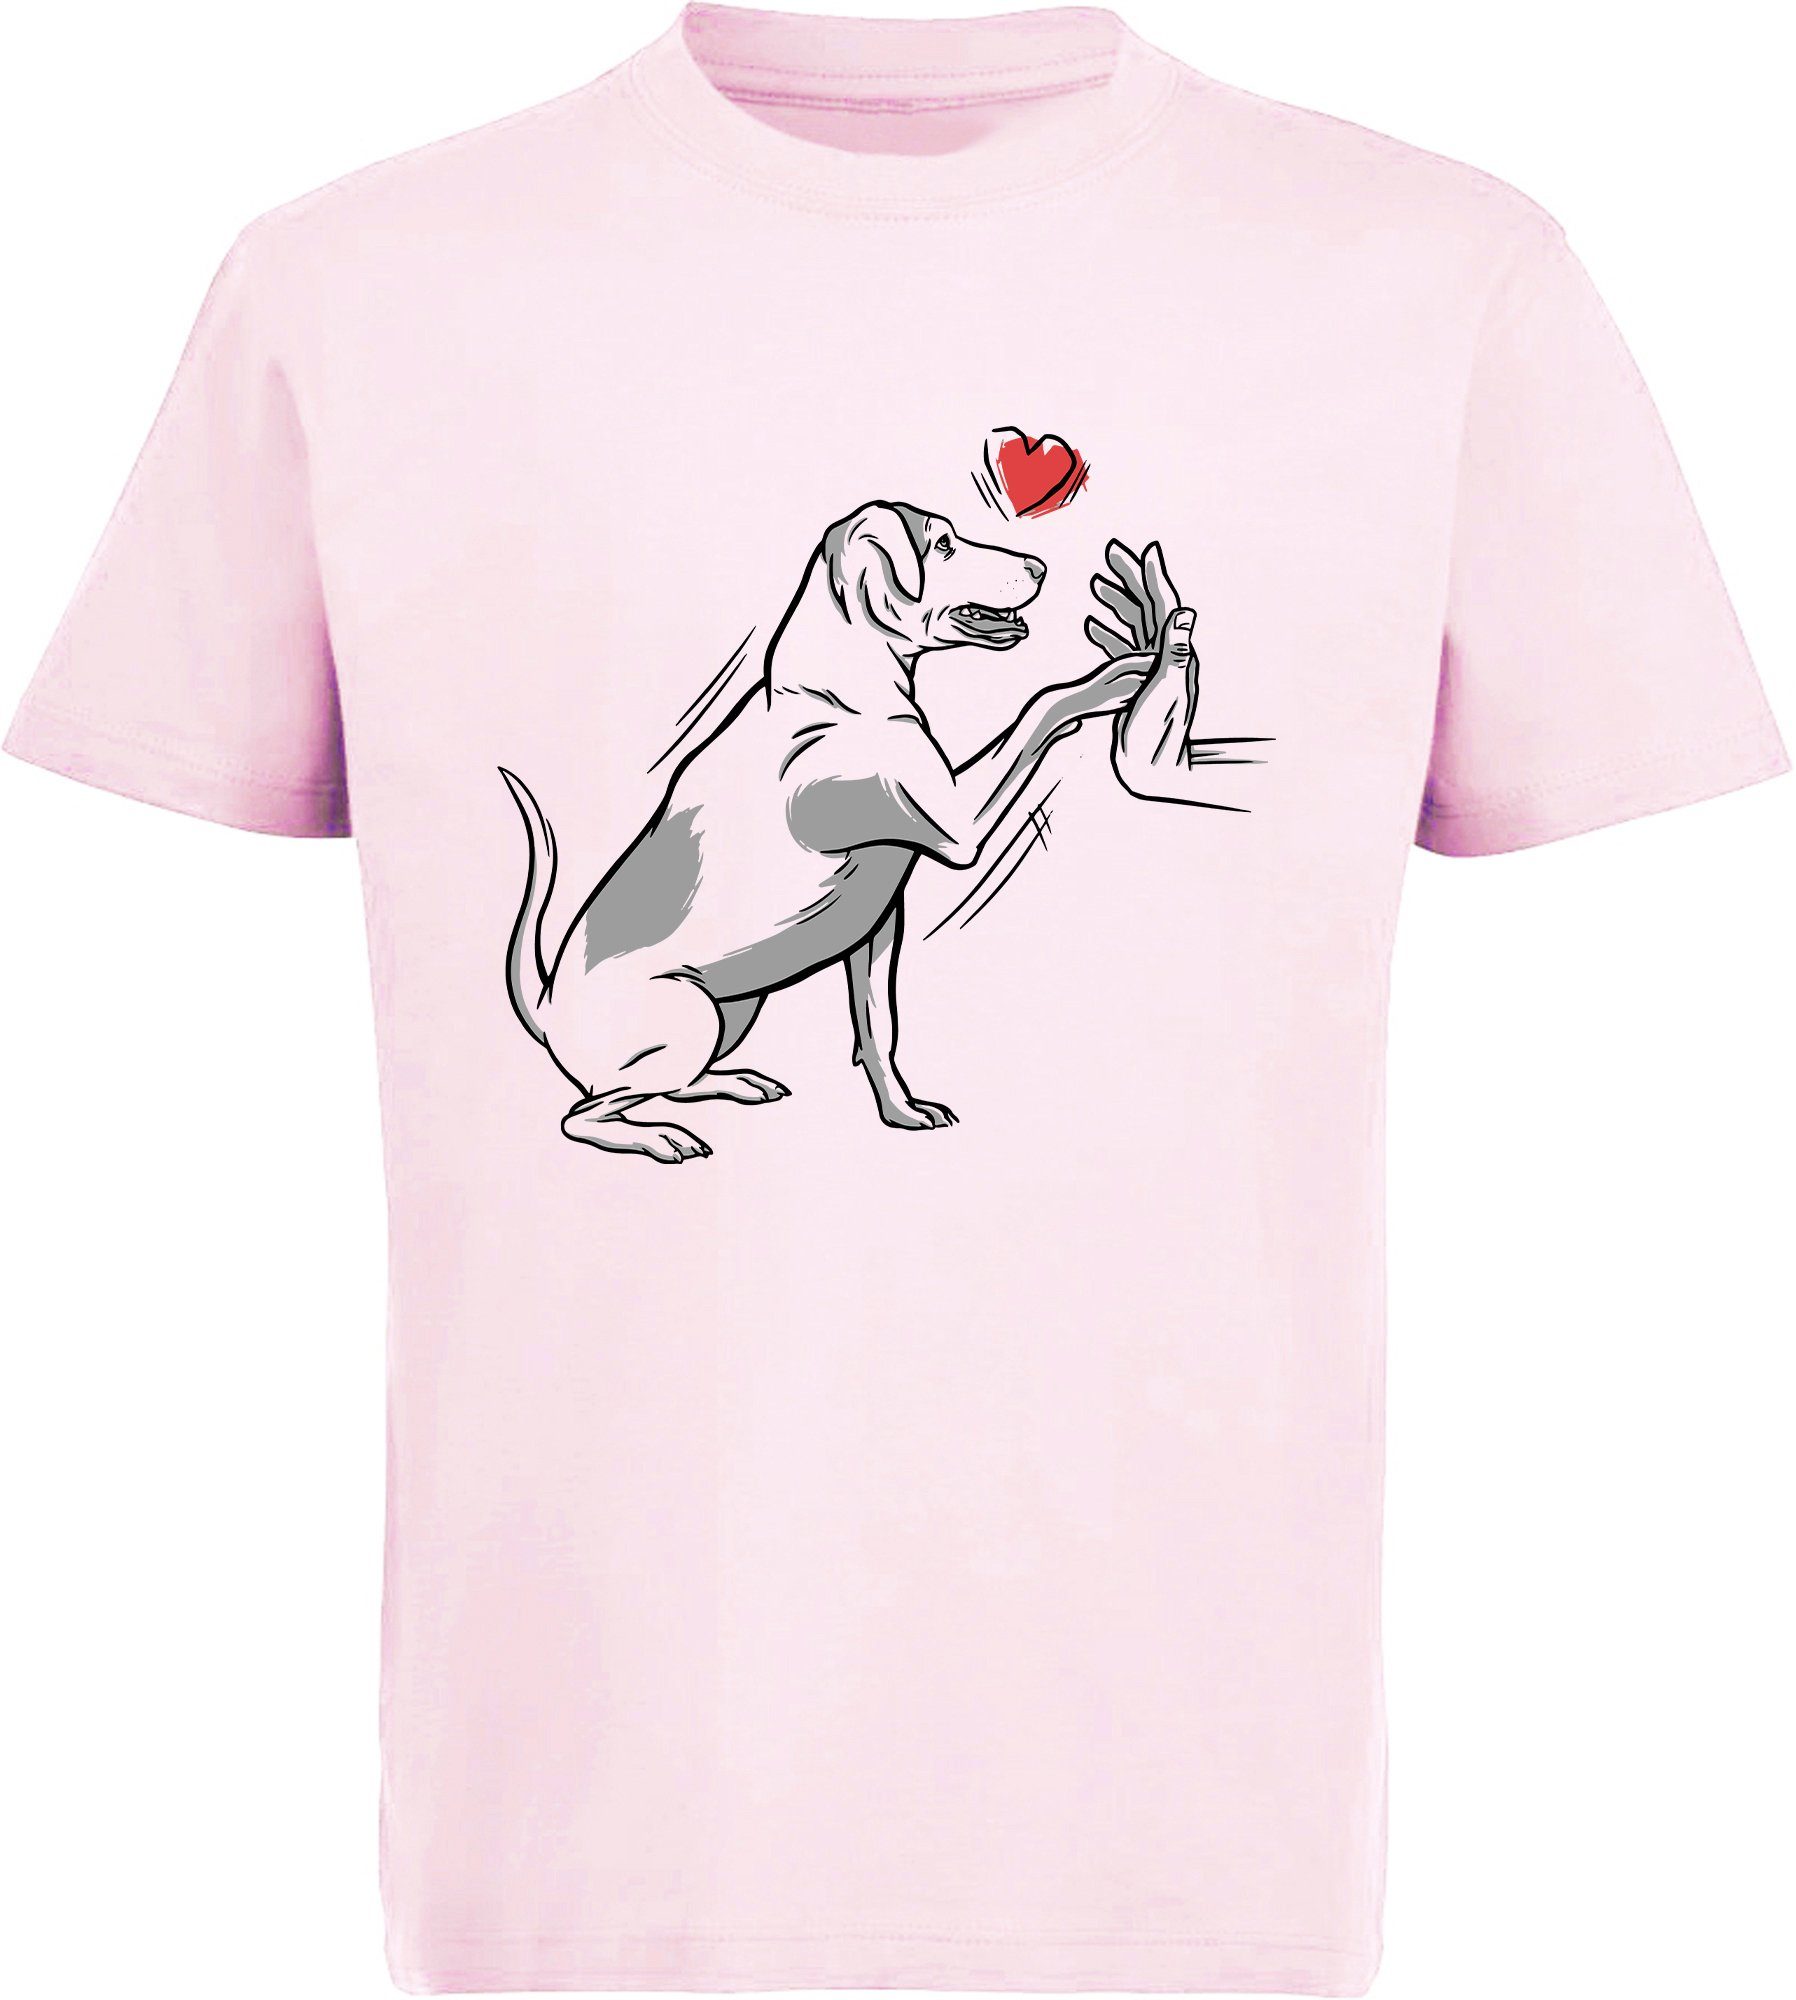 MyDesign24 Print-Shirt Kinder Hunde T-Shirt bedruckt - Labrador gibt Pfötchen Baumwollshirt mit Aufdruck, i234 rosa